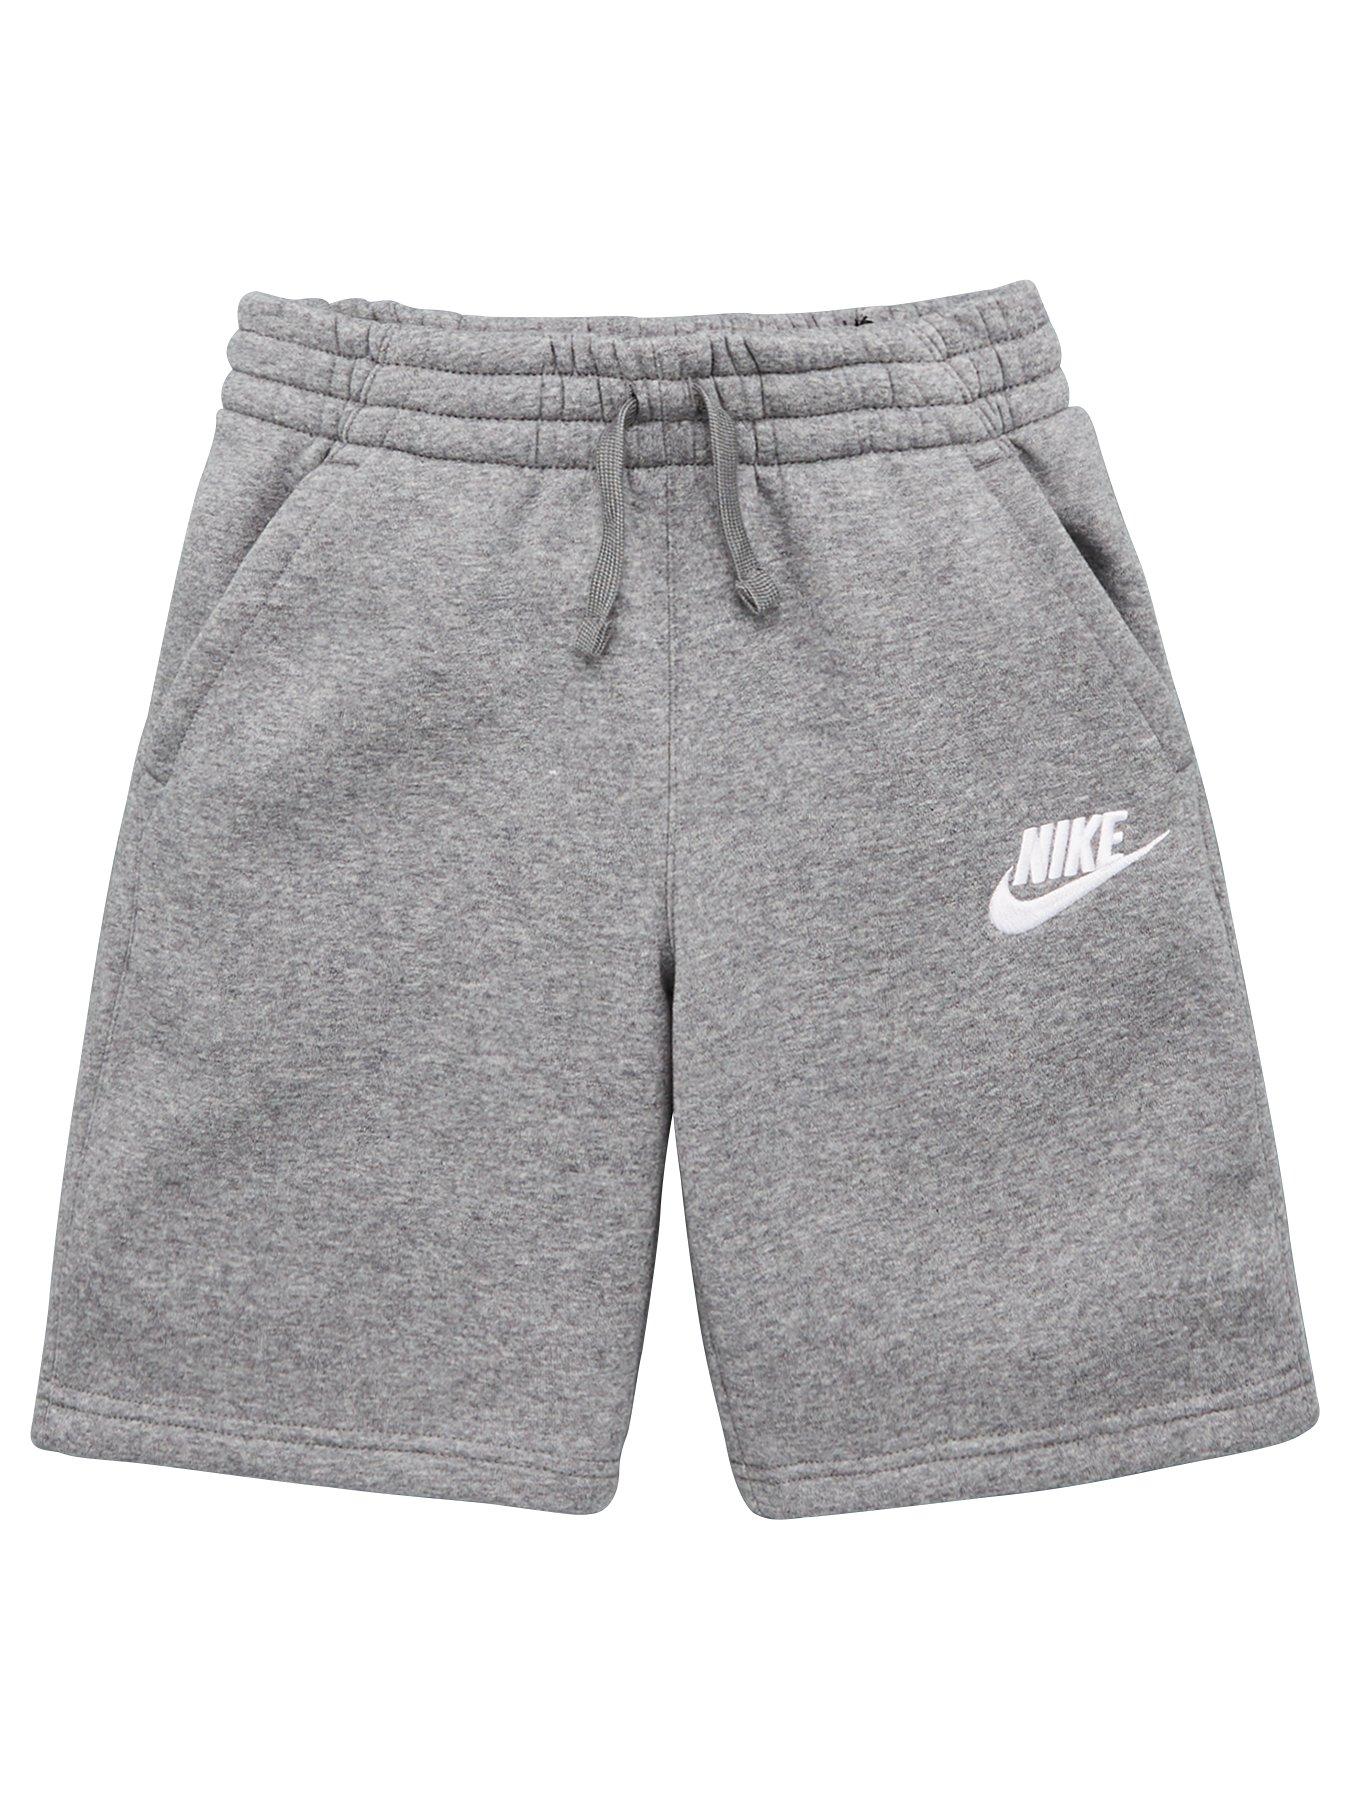 grey boys nike shorts